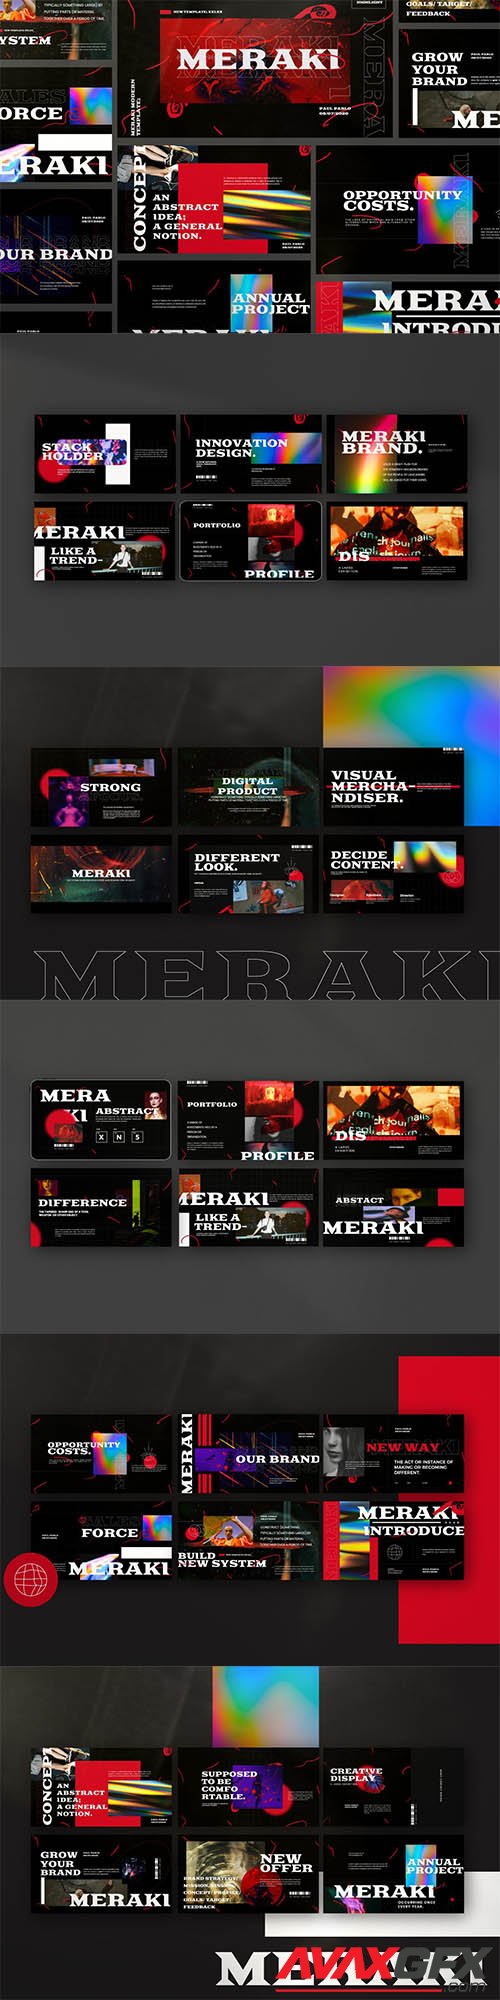 Meraki - Urban Creative Agency Powerpoint, Keynote and Google Slides